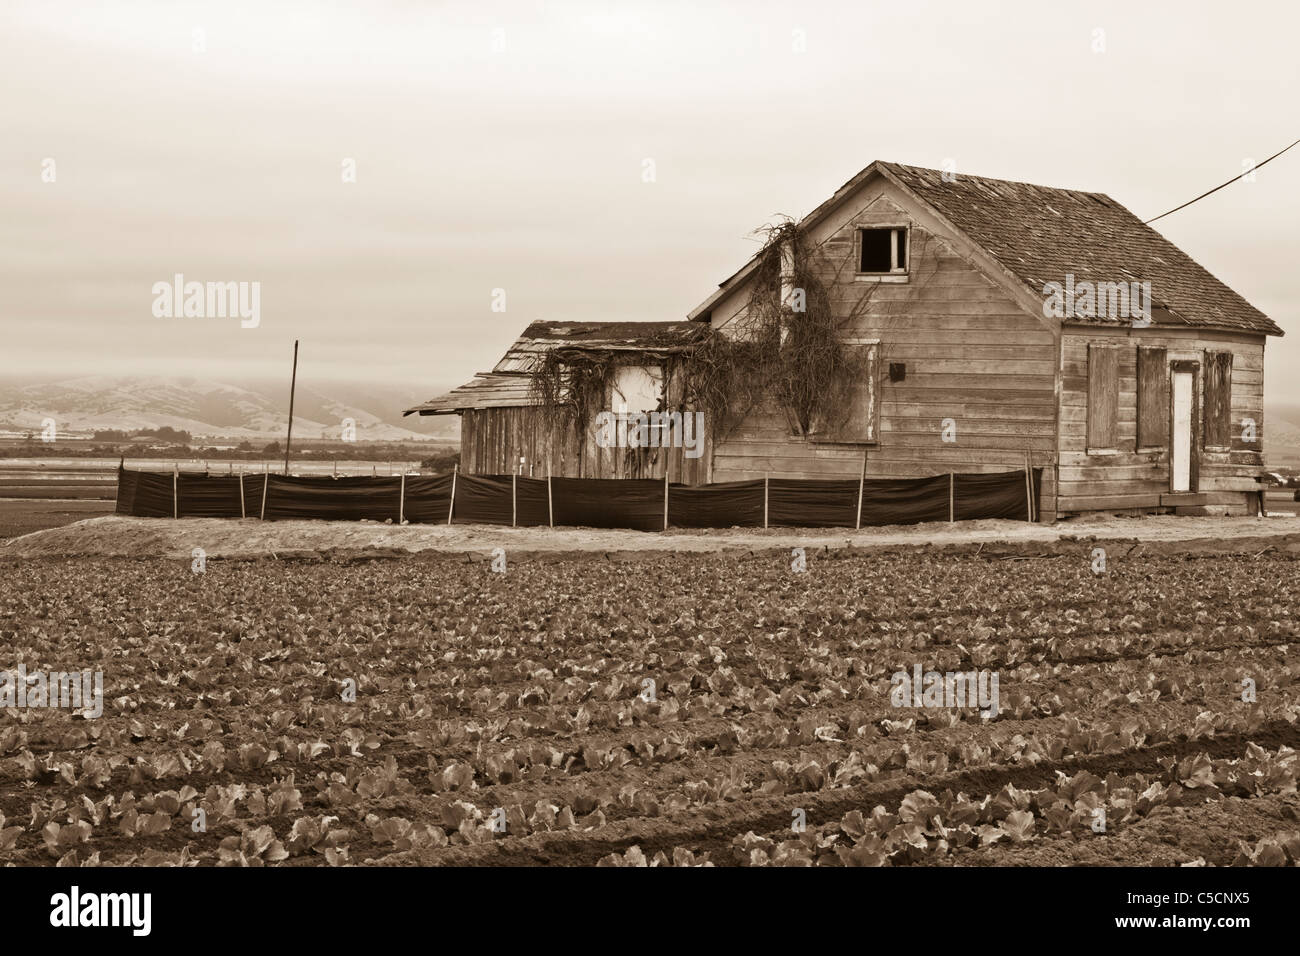 Les terres agricoles de la vallée de Salinas, en Californie, USA Banque D'Images